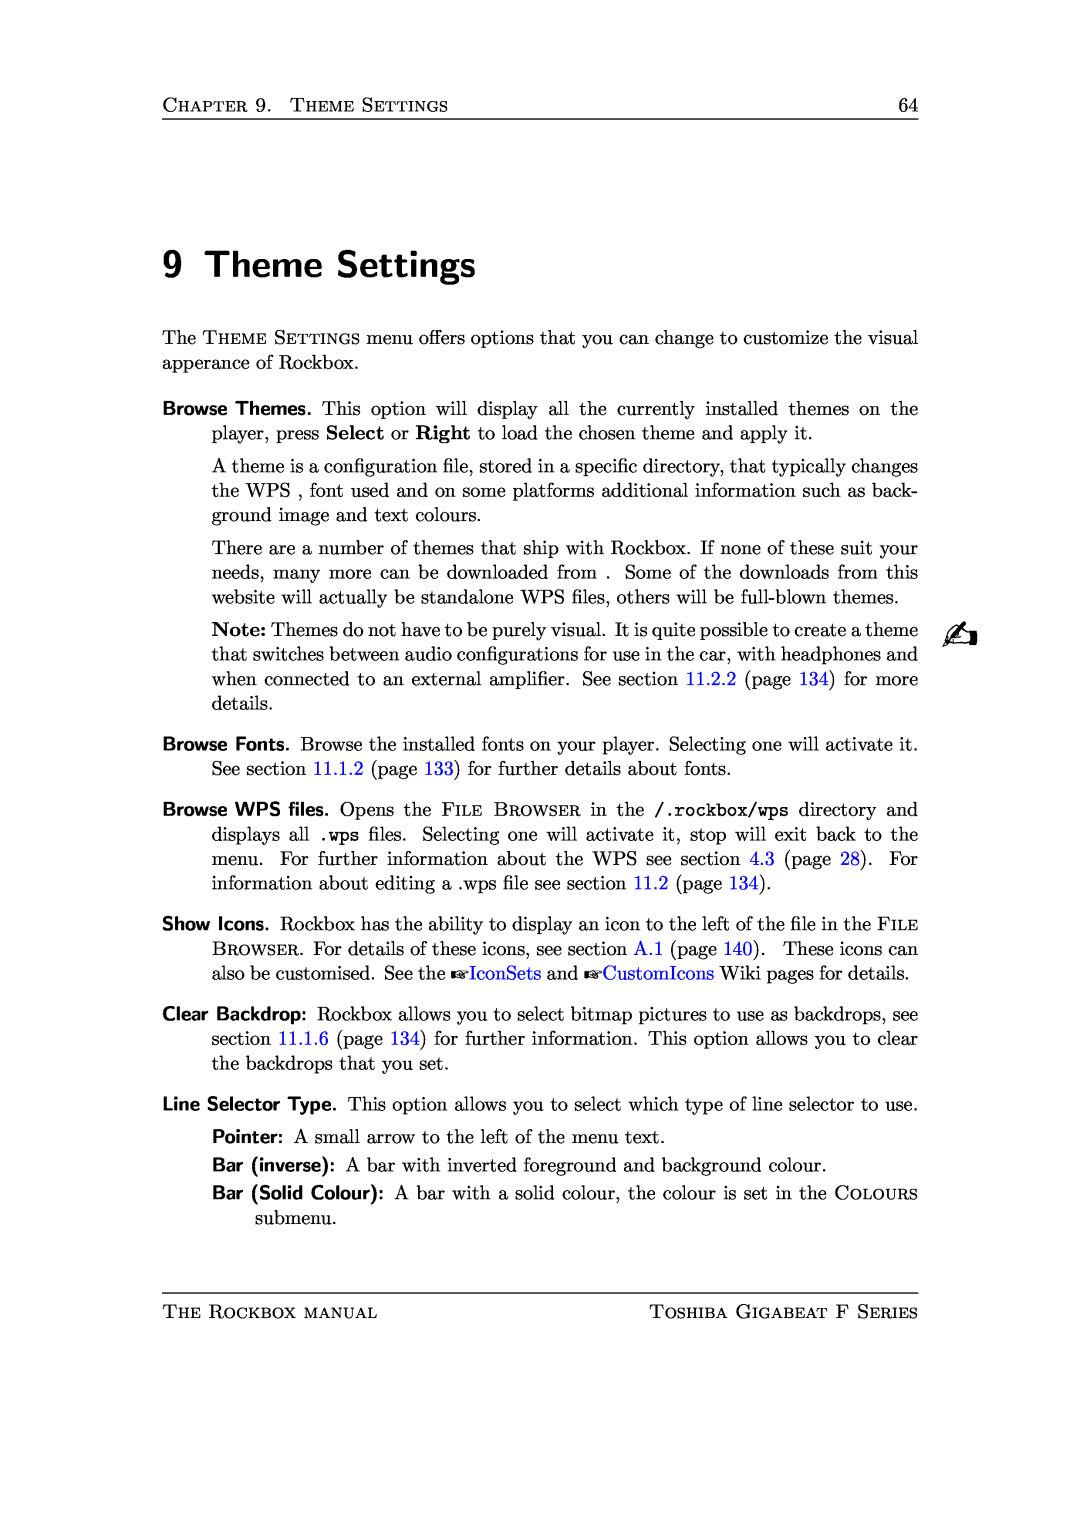 Toshiba F Series manual Theme Settings 